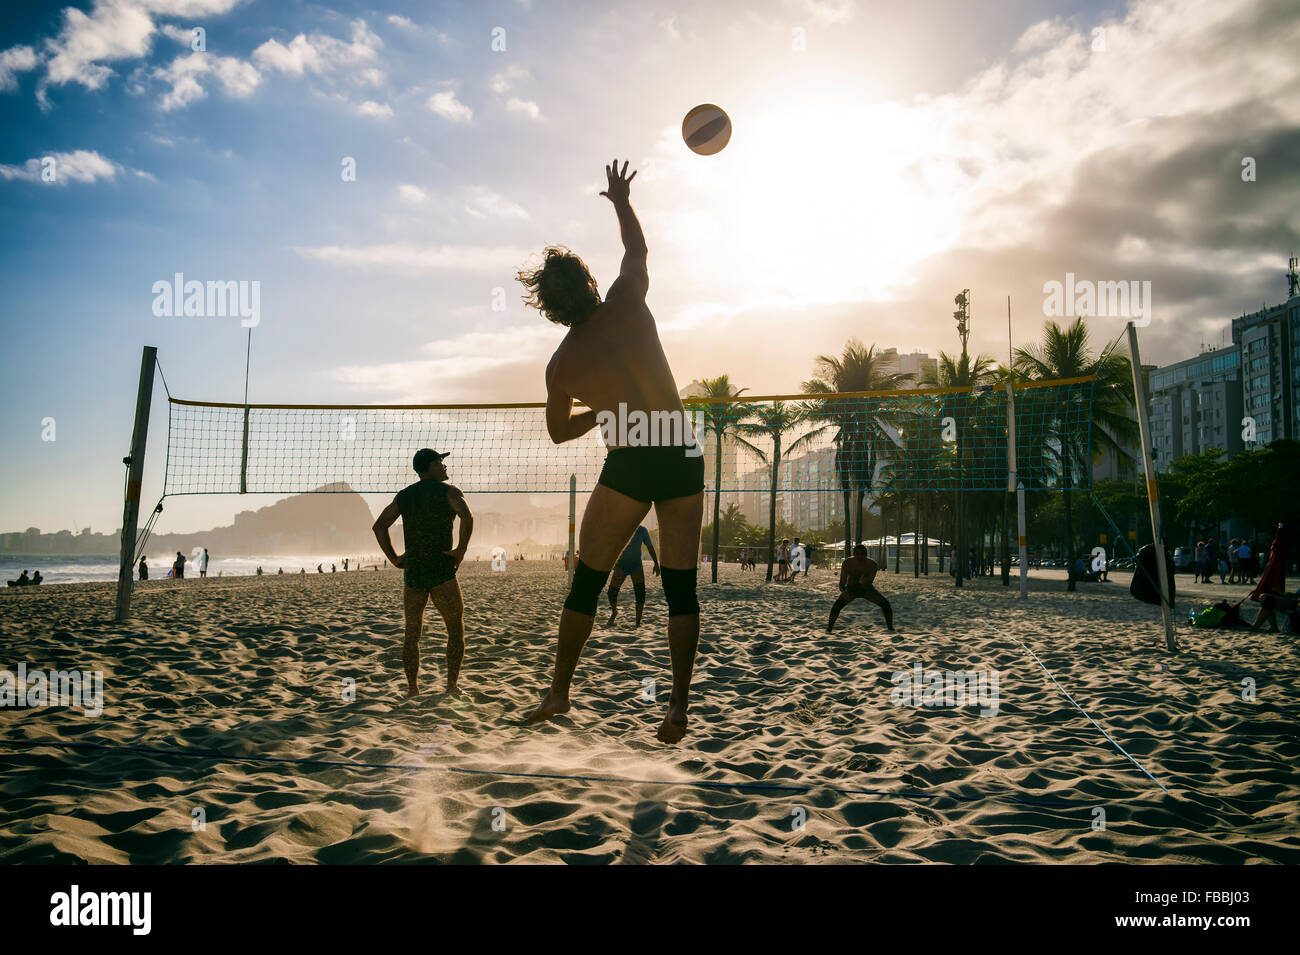 RIO DE JANEIRO, BRAZIL - OCTOBER 30, 2015: A group of young Brazilian men play game of volleyball at sunset on Copacabana Beach. Stock Photo